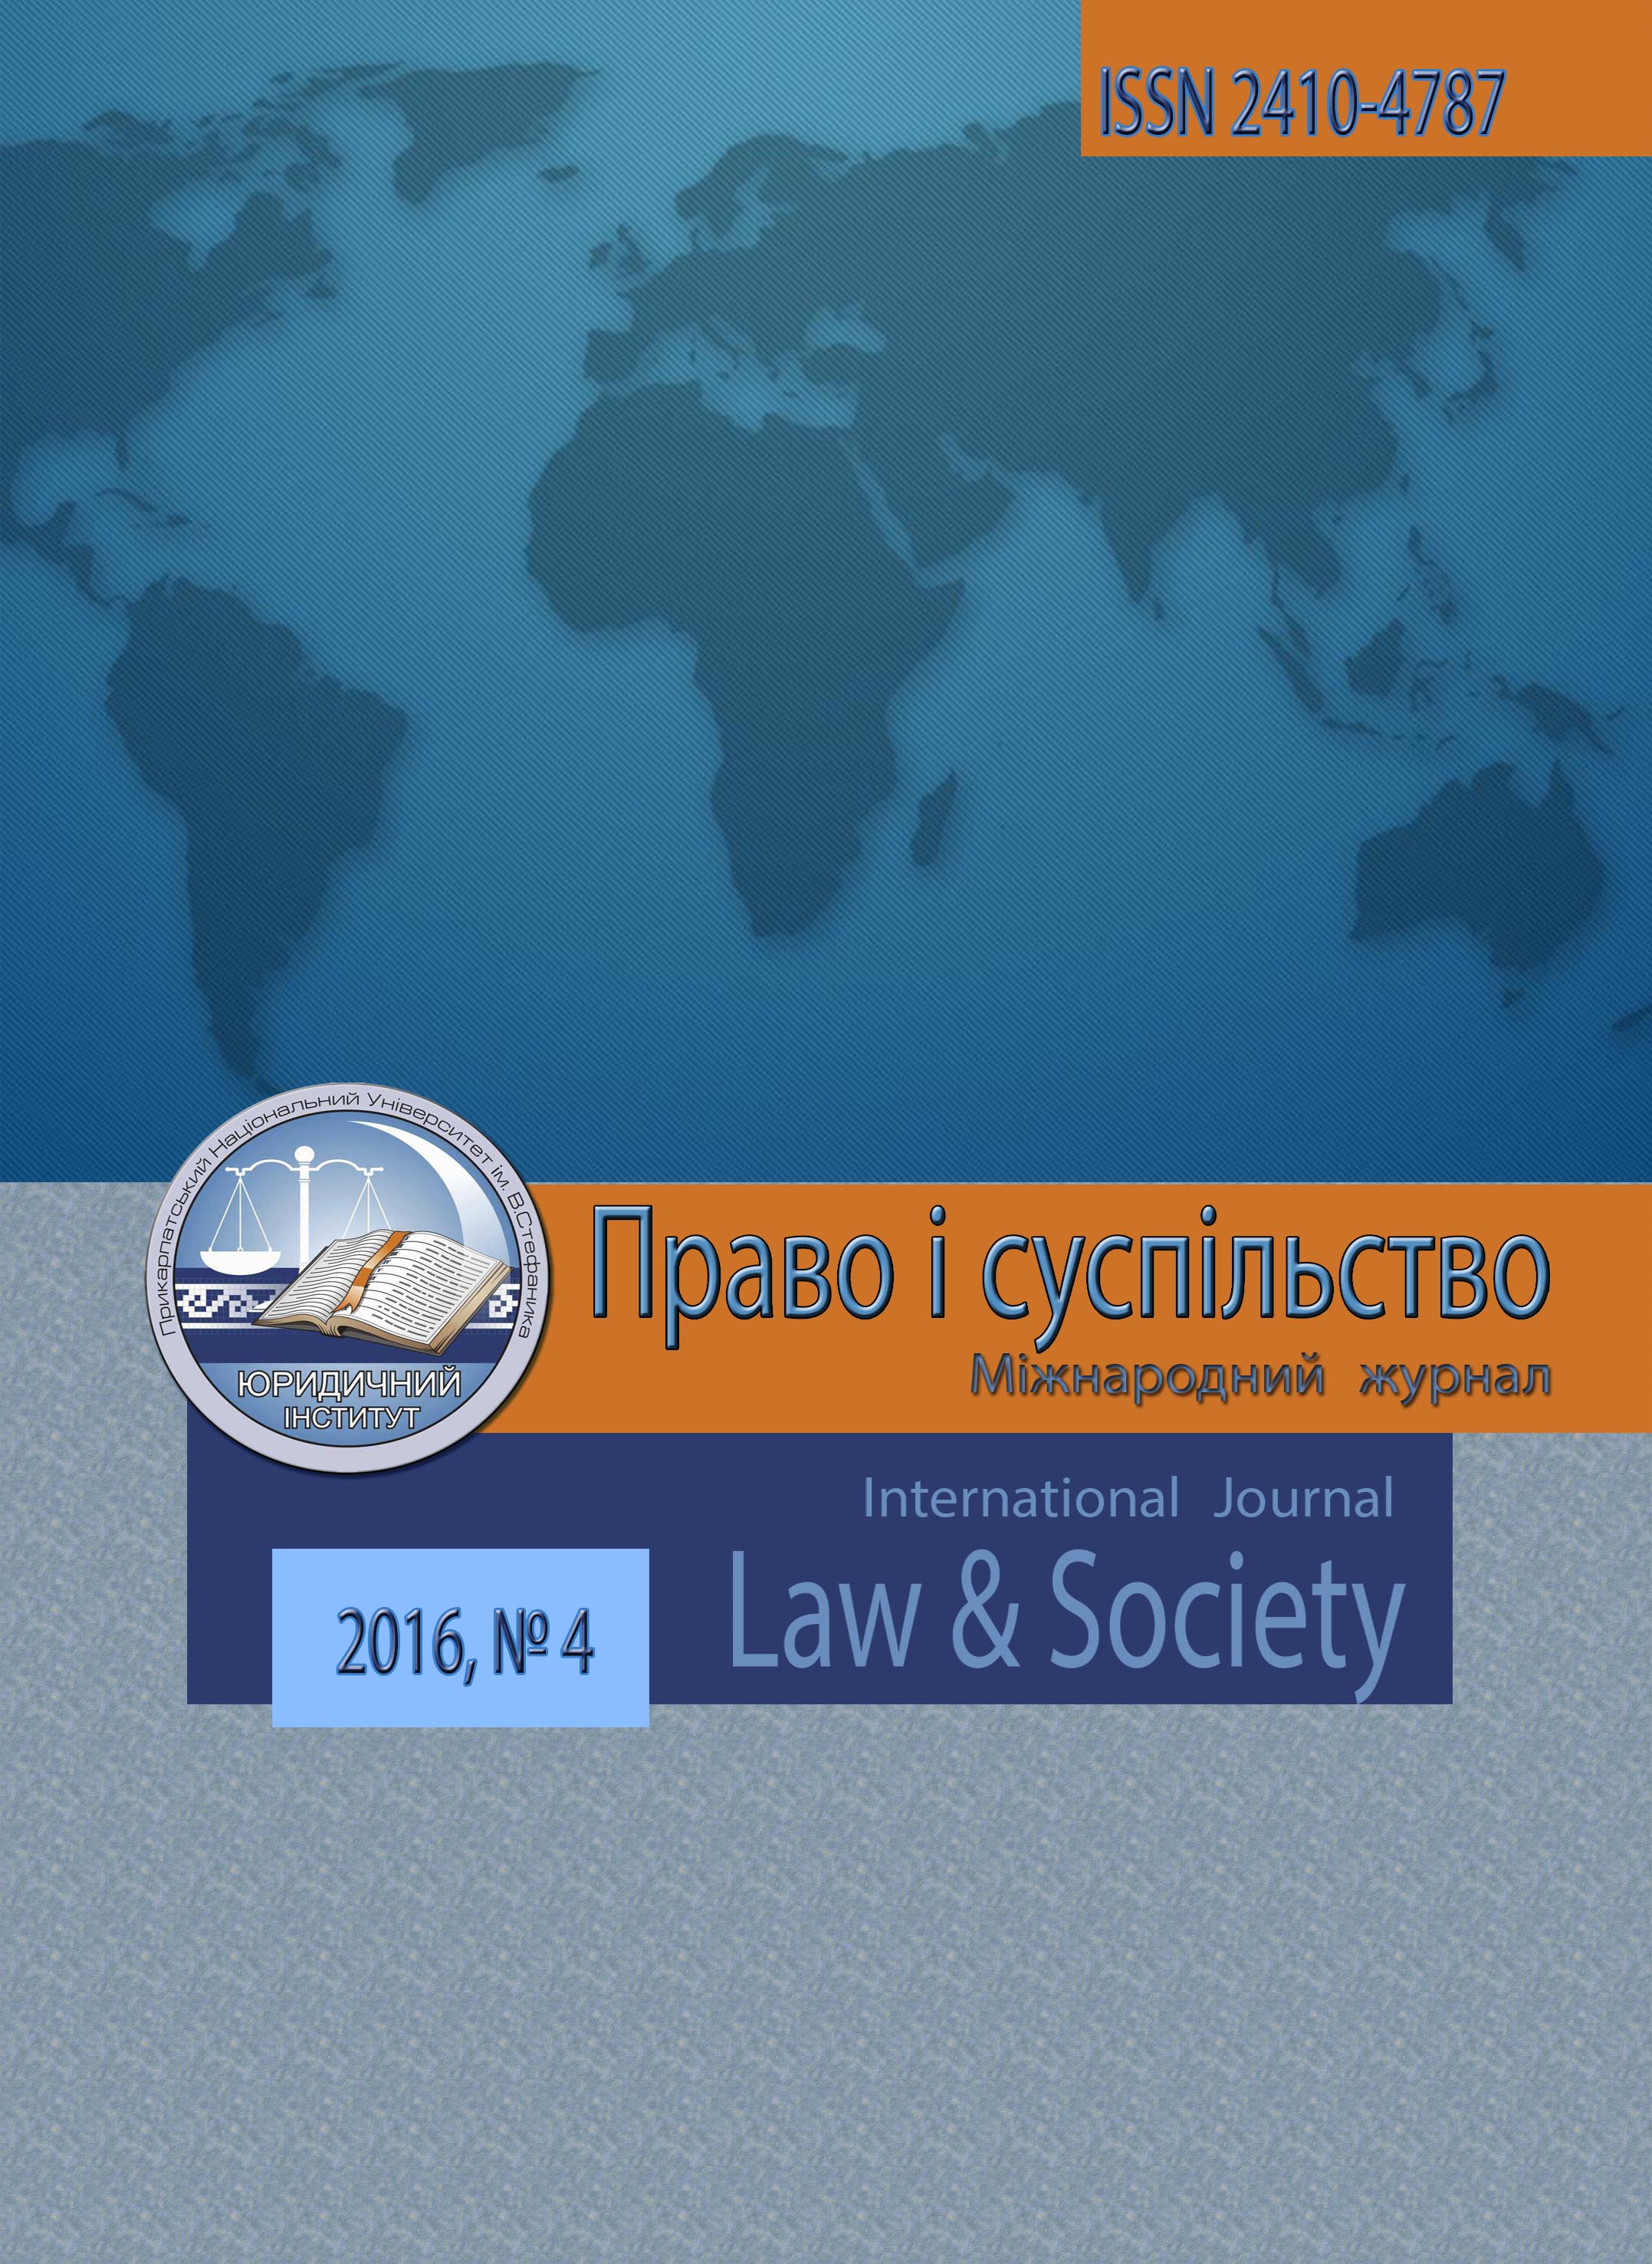 					View Vol. 4 (2016): Law&Society
				